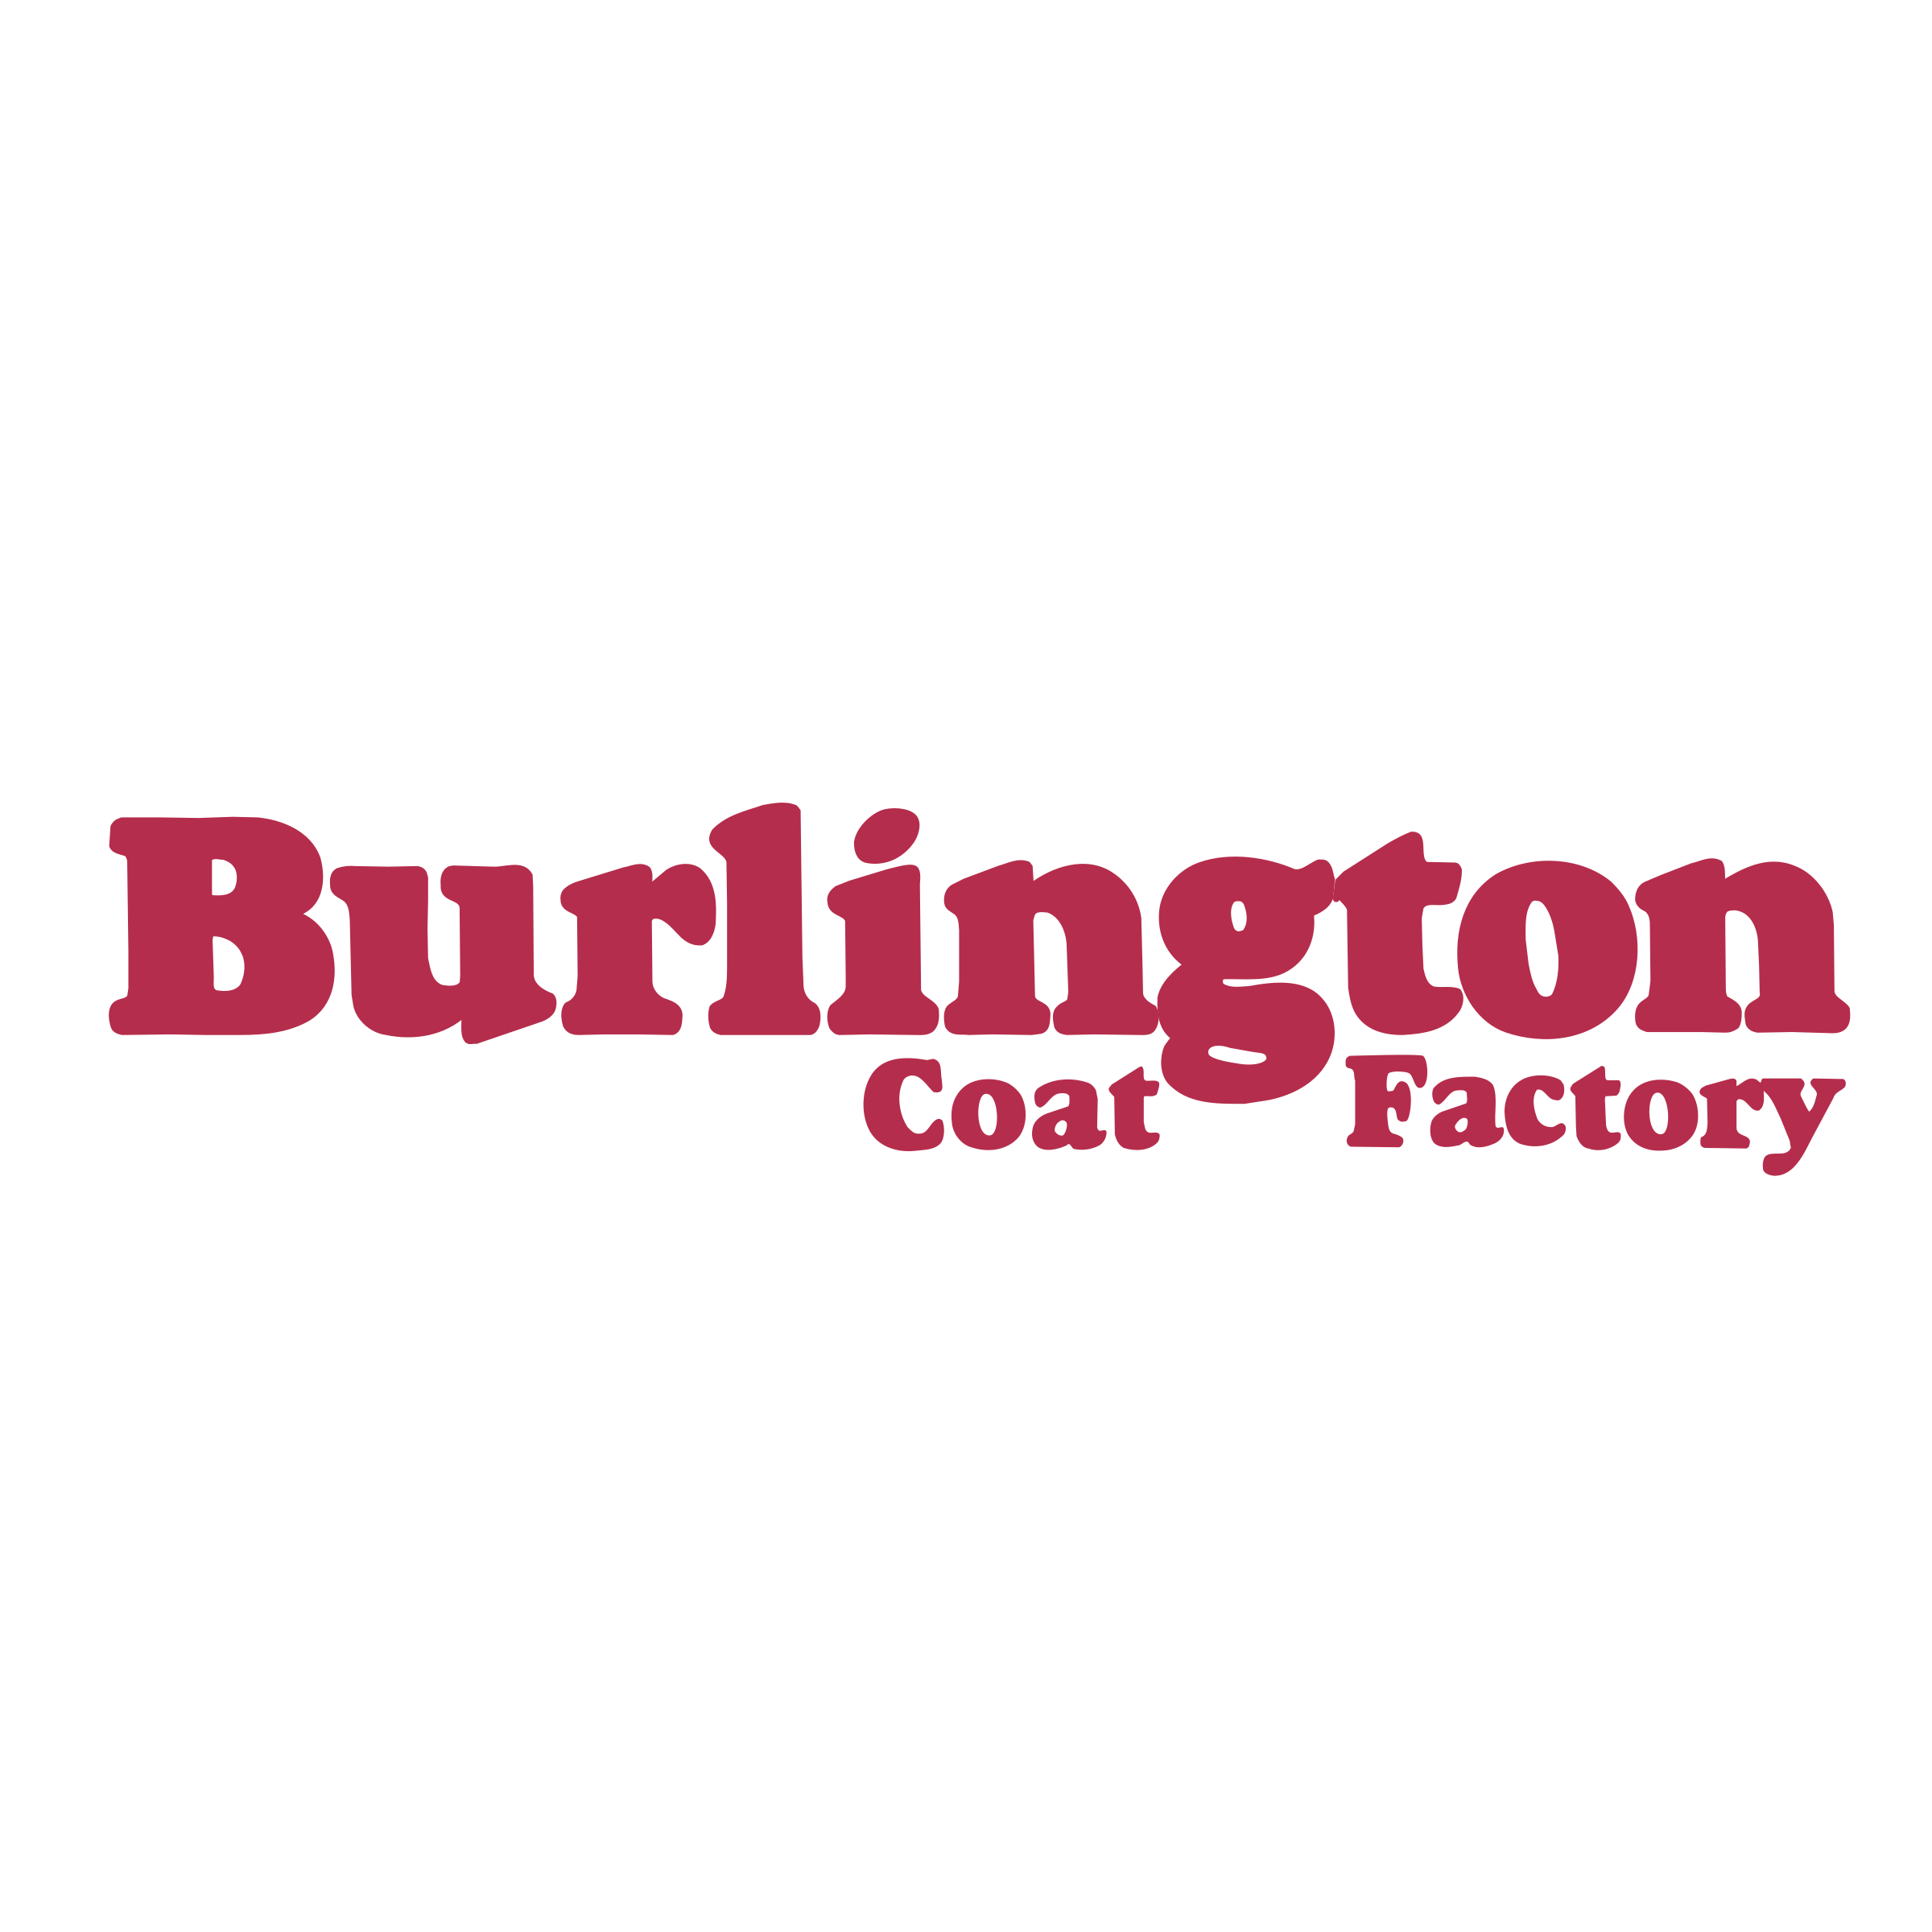 Burlington Logo - Burlington Coat Factory Logo PNG Transparent & SVG Vector - Freebie ...